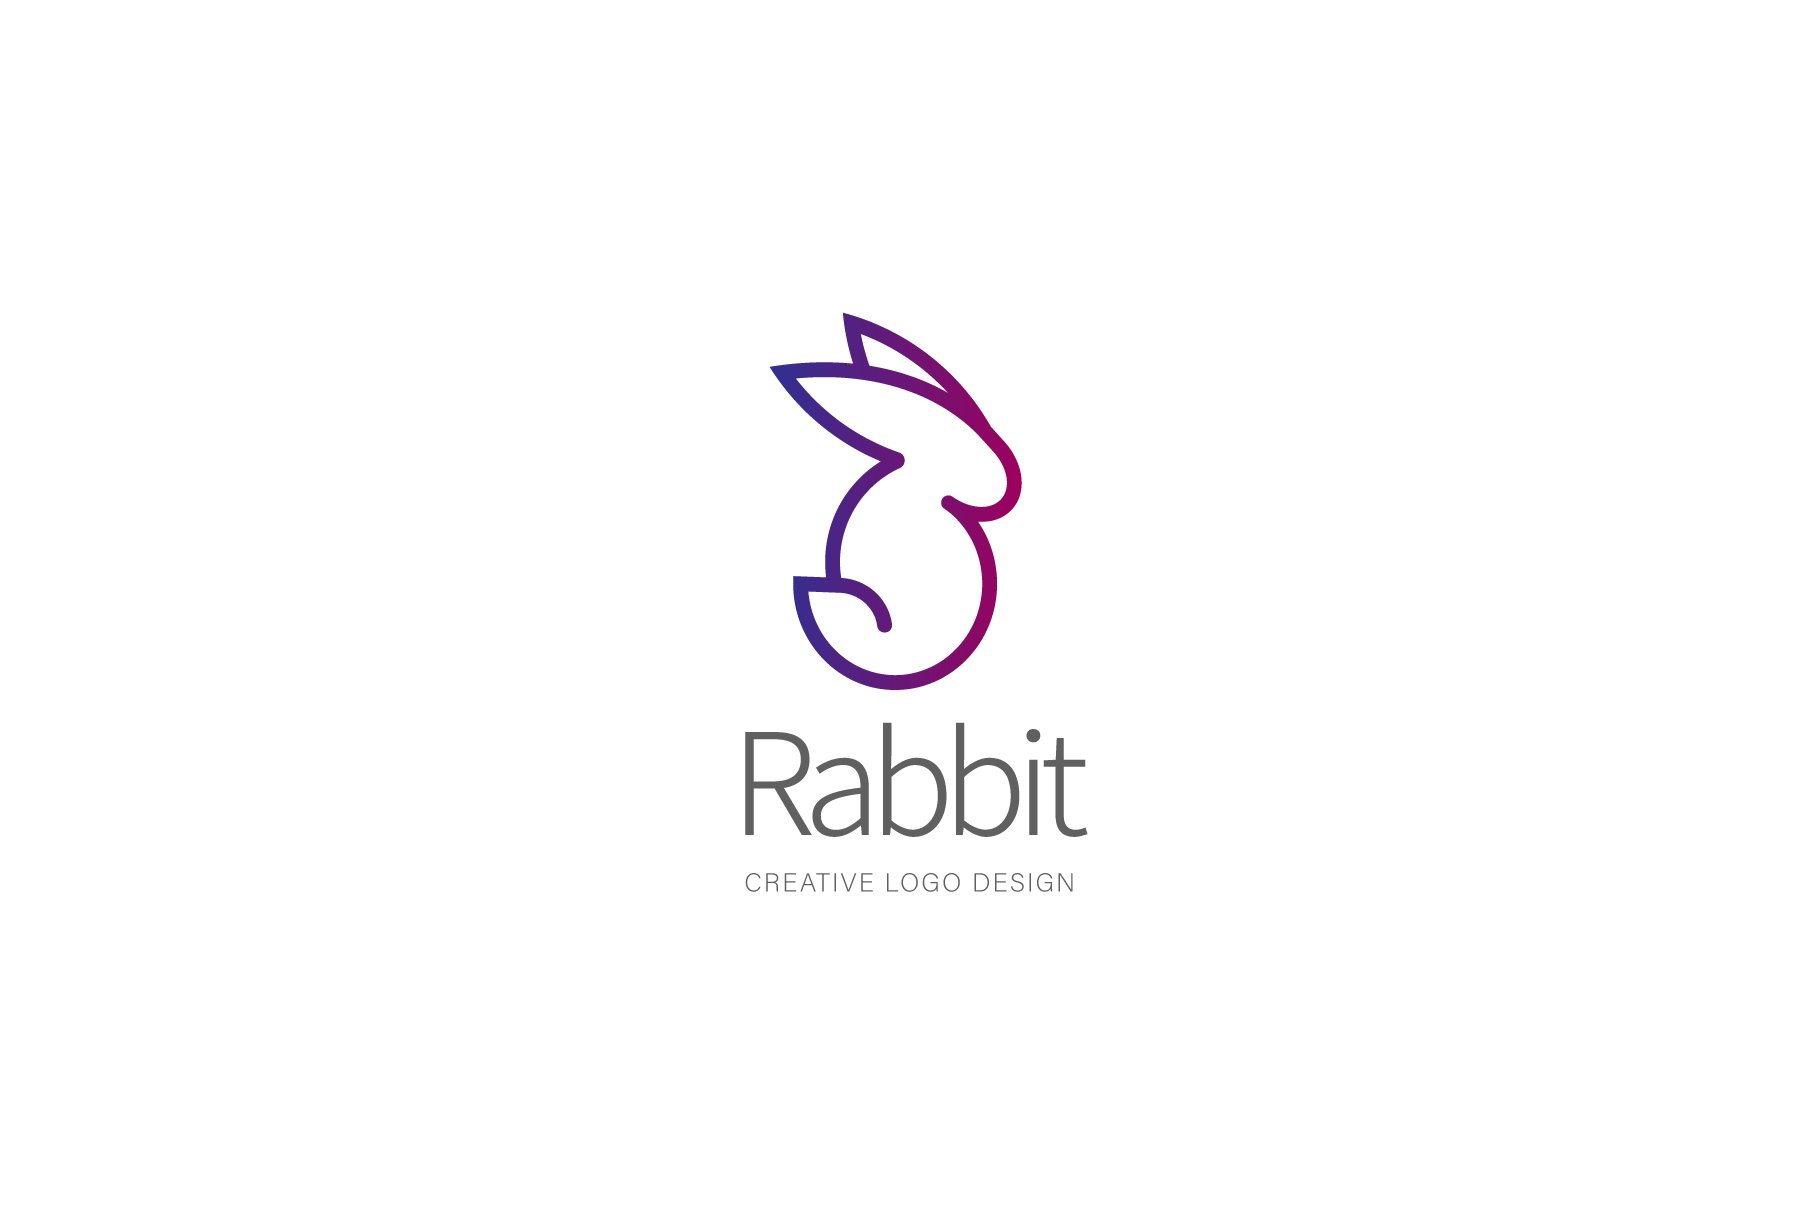 rabbit logo preview image.